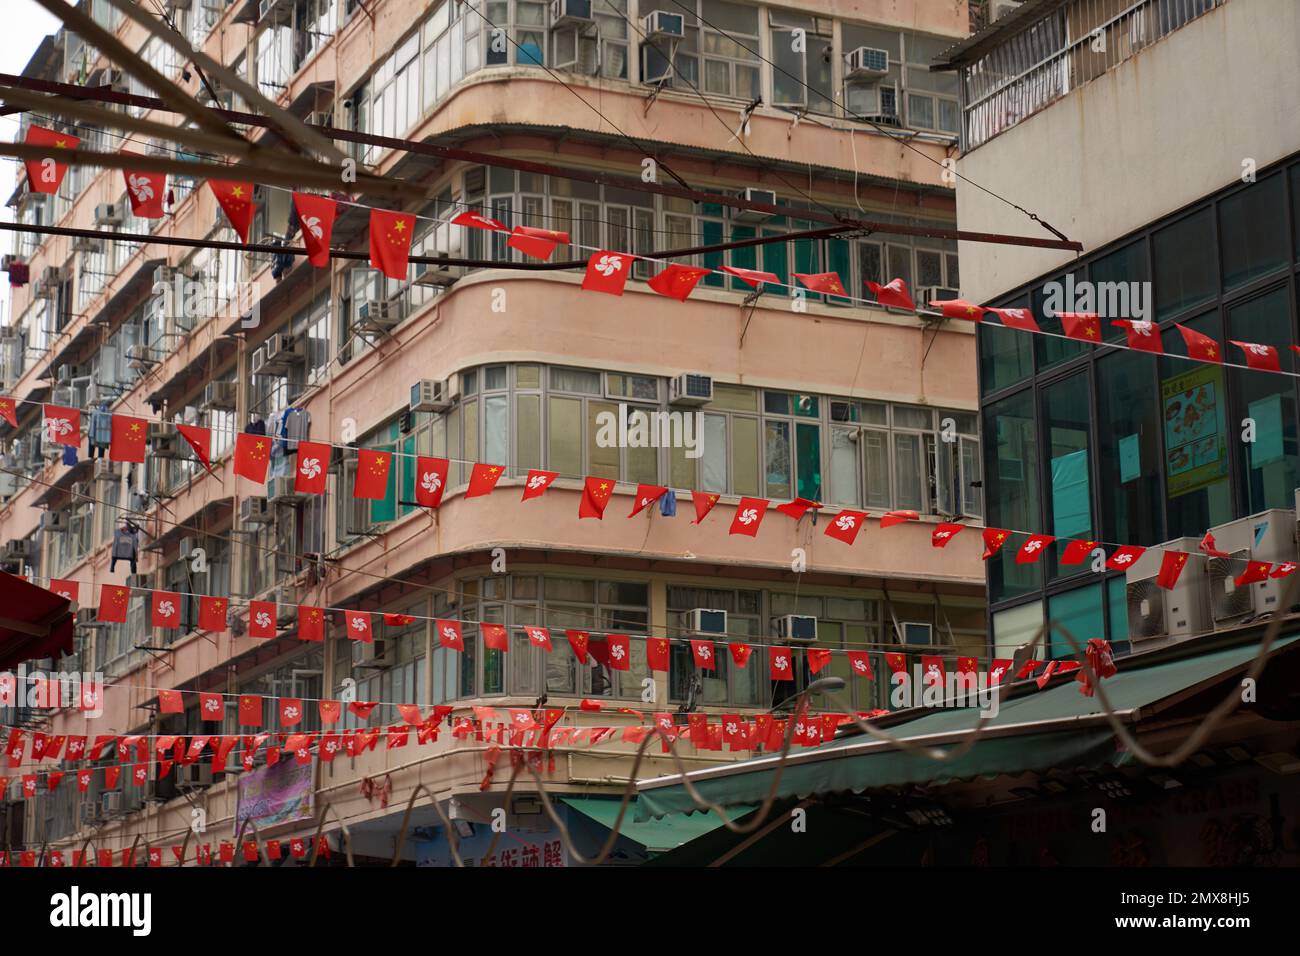 Rows of Chinese and Hong Kong flags hang over an urban street in central Hong Kong. Stock Photo